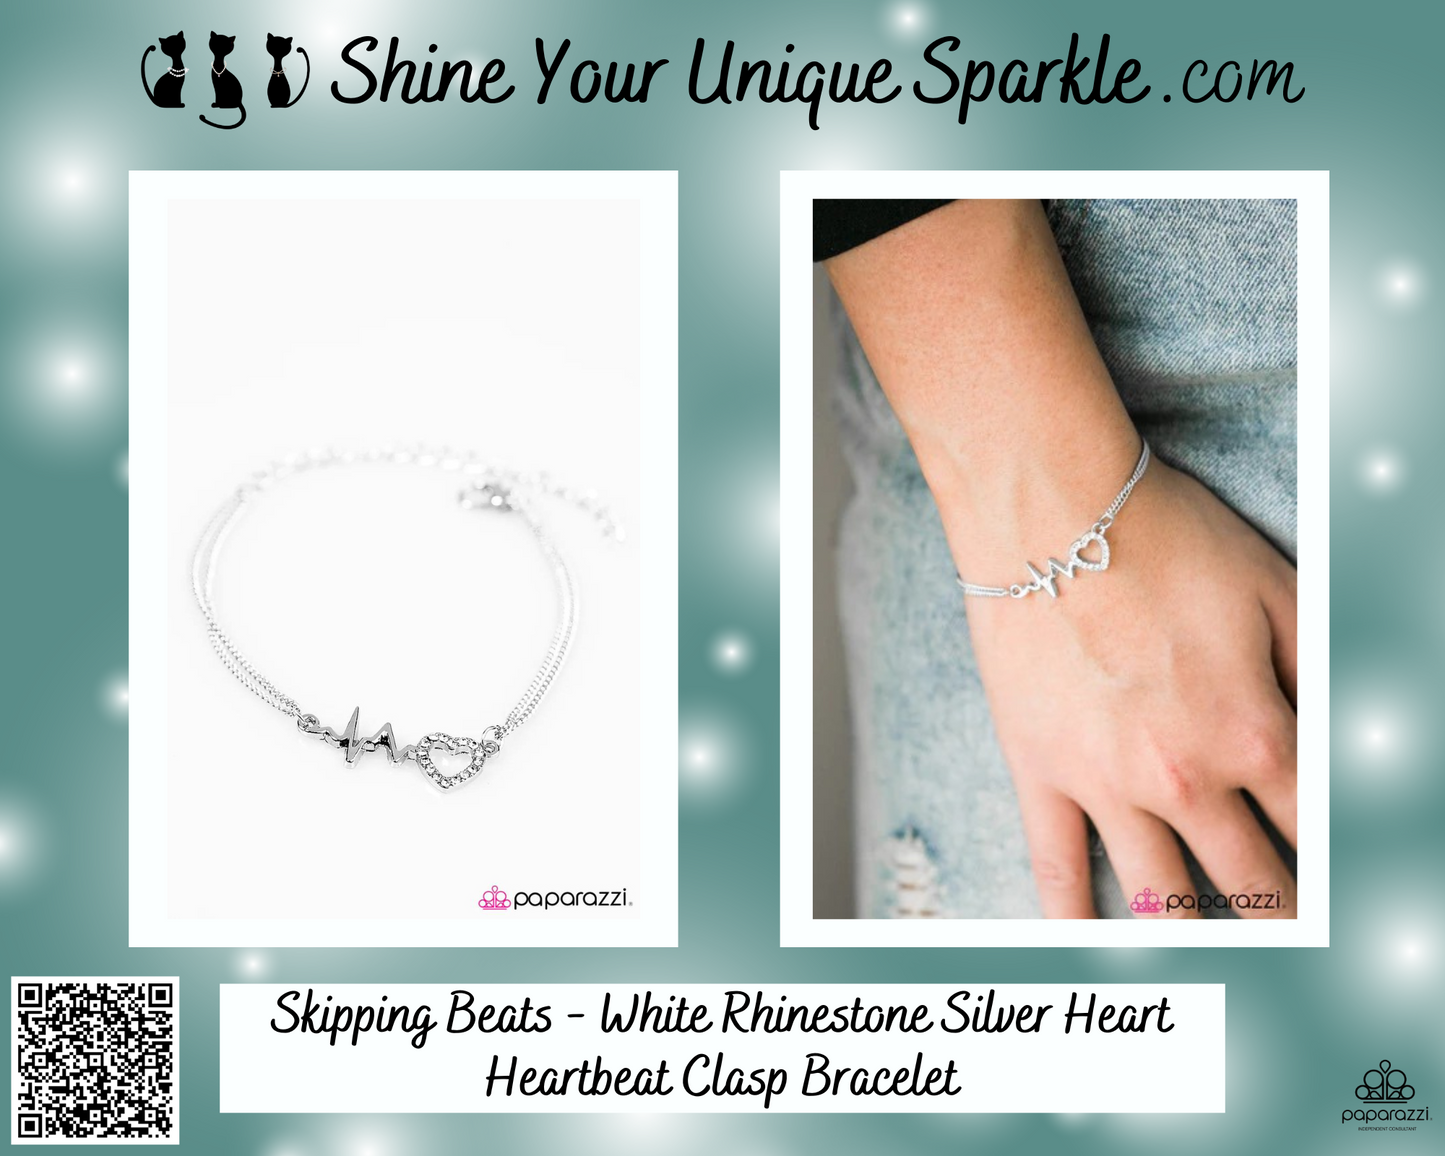 Skipping Beats - White Rhinestone Silver Heart Heartbeat Clasp Bracelet